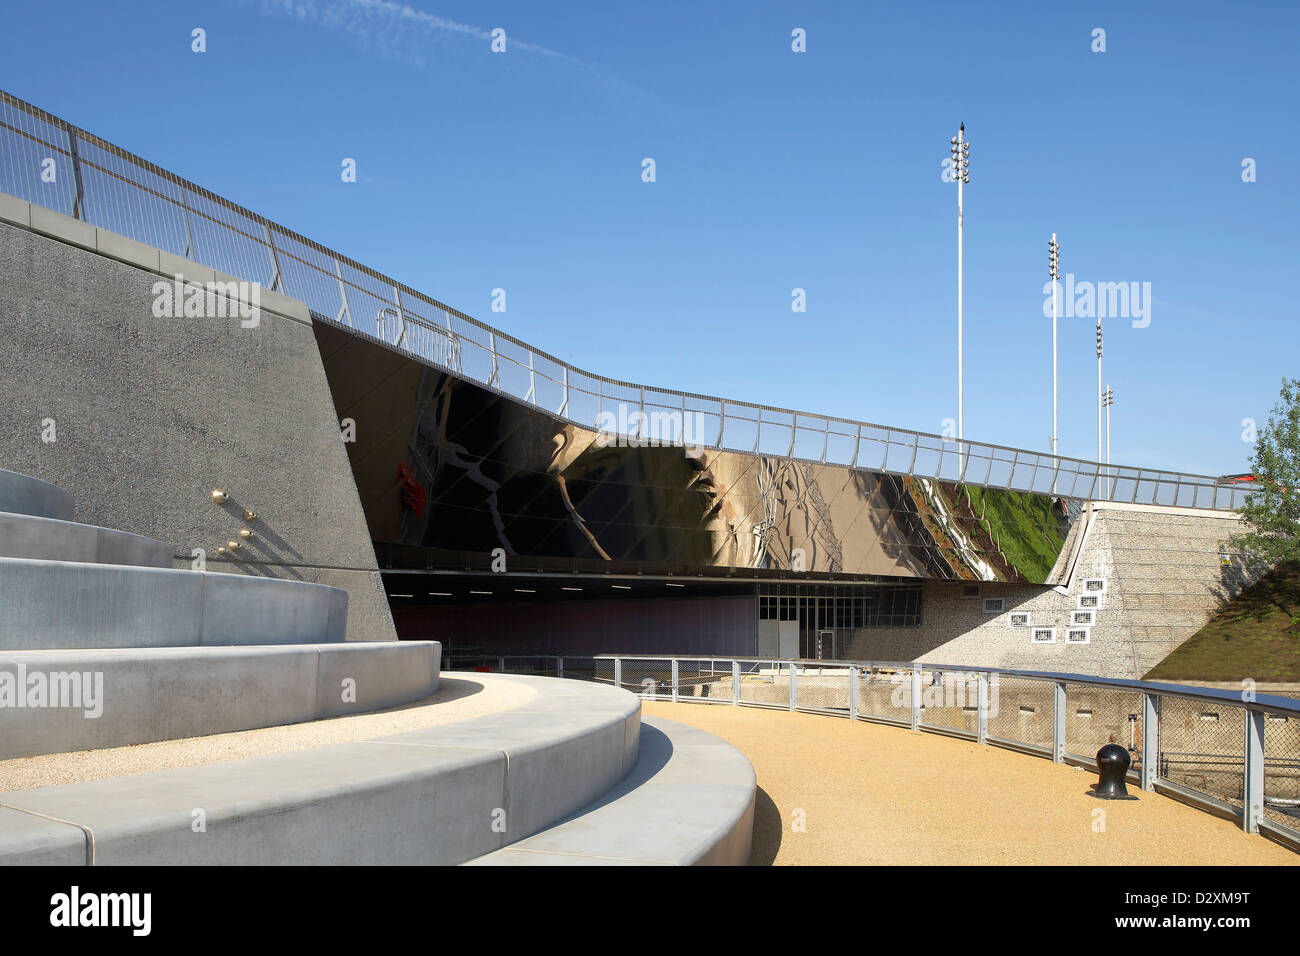 Olympic Bridge, London, United Kingdom. Architect: heneghan peng architects, 2012. Bridge crossing River Lea. Stock Photo